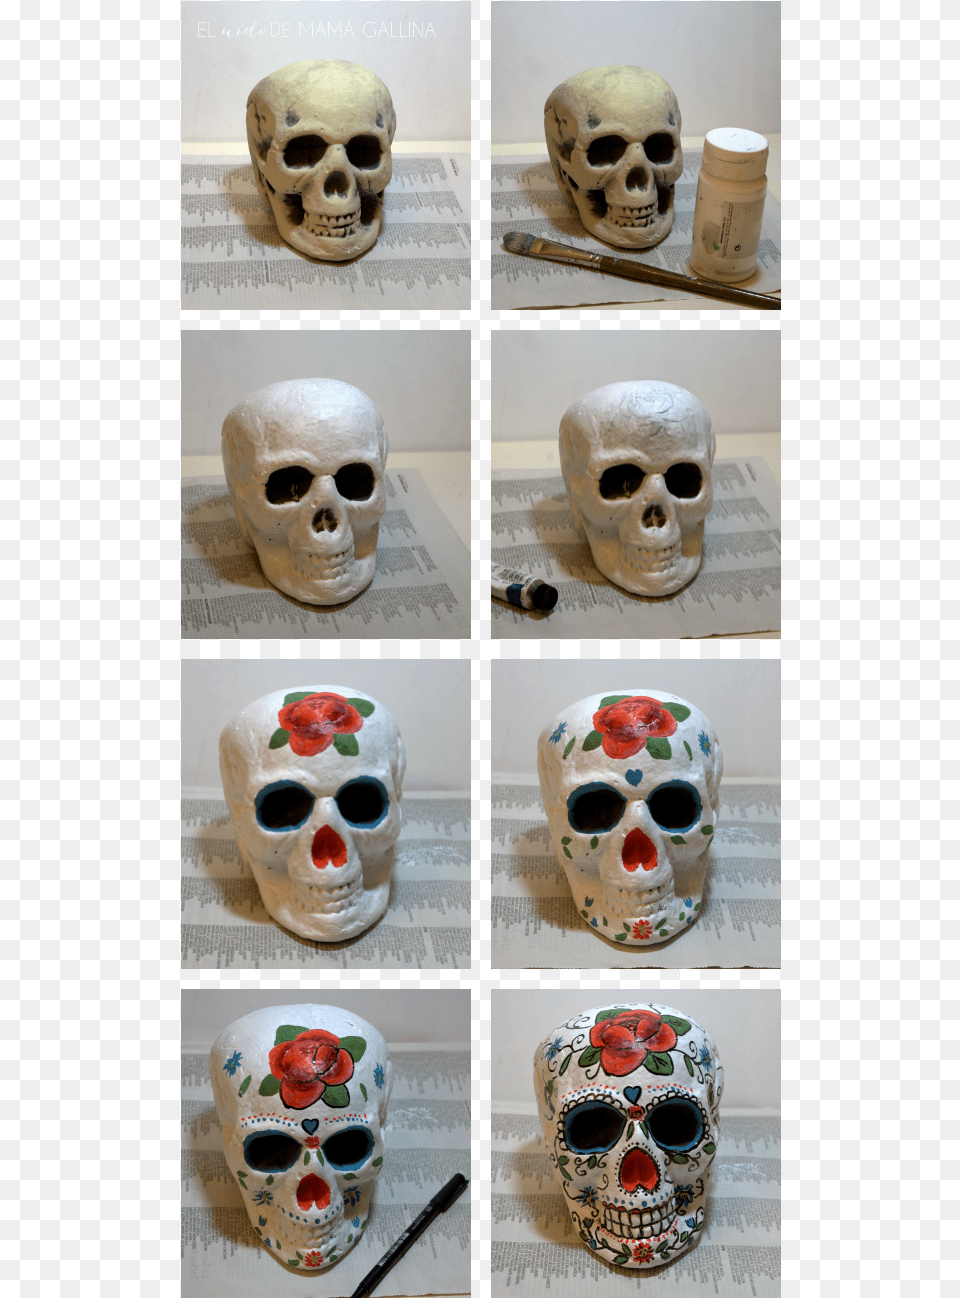 Sugar Skull Halloween Makeup Catrinas Calaveras De Unicel Decoradas, Art, Collage, Accessories, Sunglasses Png